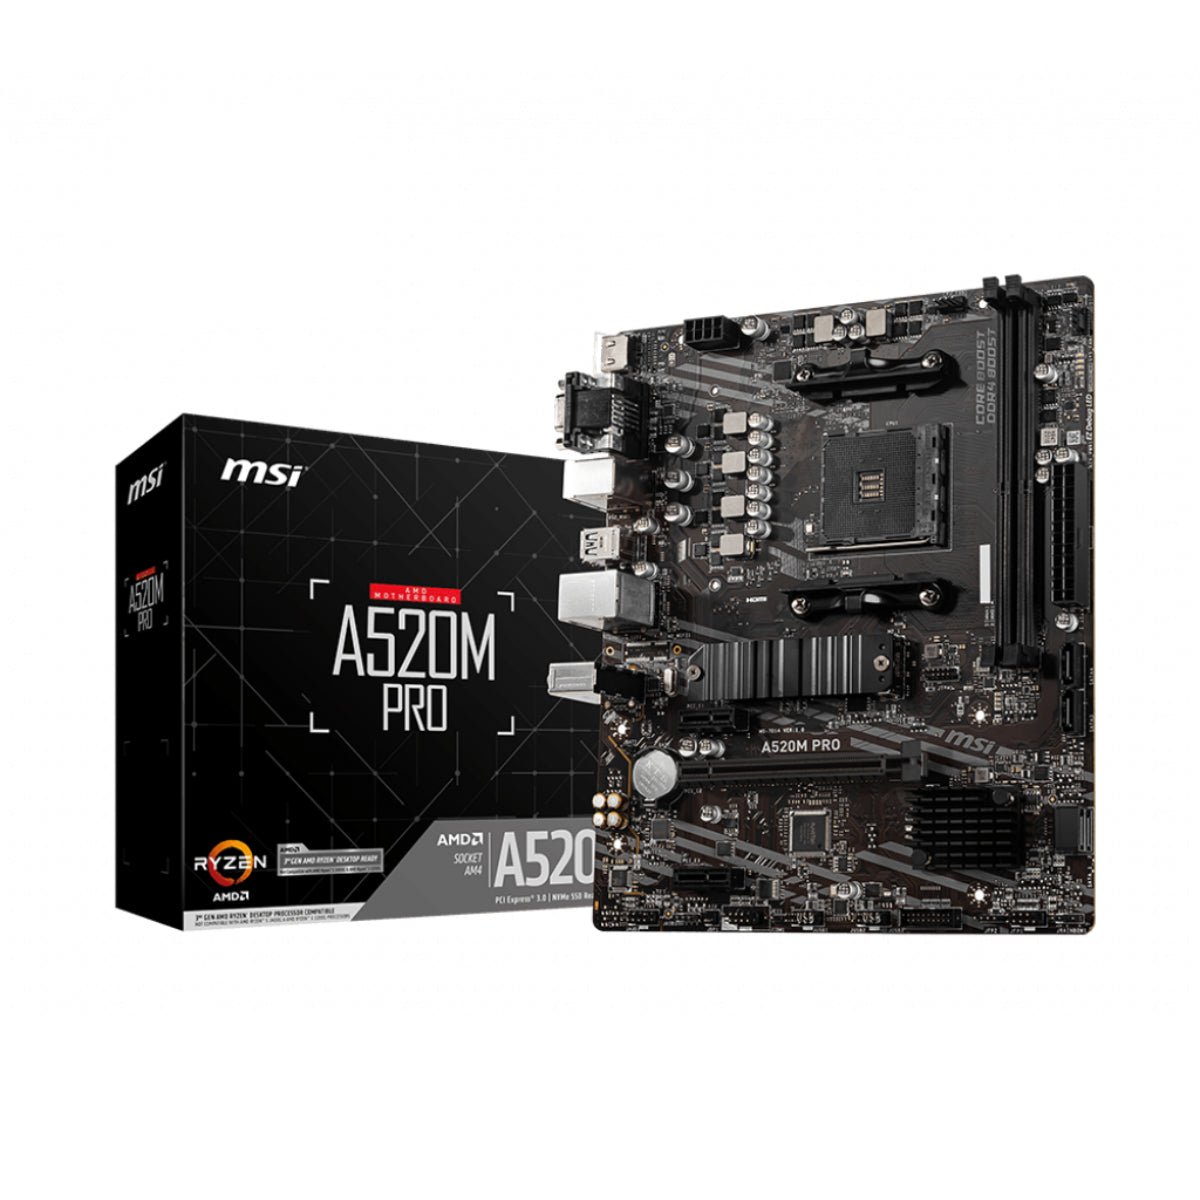 MSI A520M Pro - DDR4 AM4 Micro-ATX AMD Motherboard - Store 974 | ستور ٩٧٤